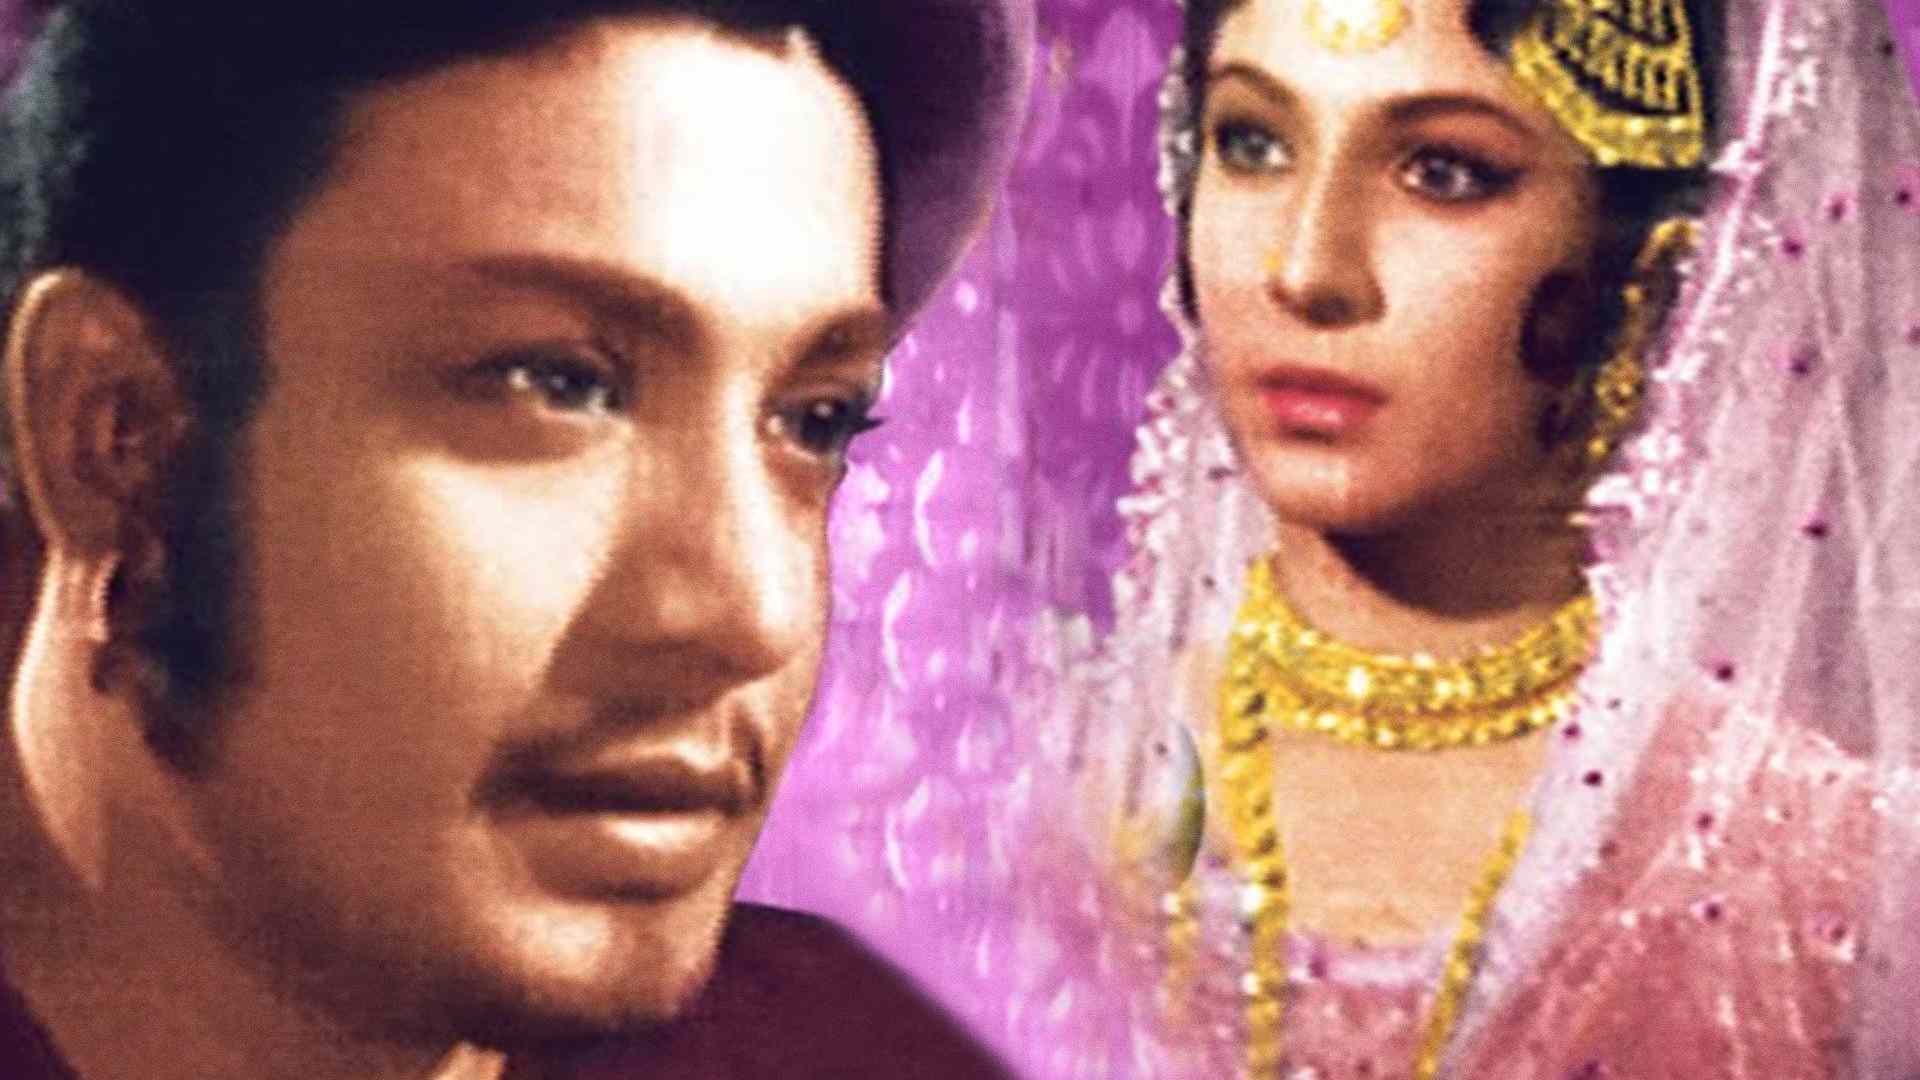 The 1967 film stars Uttam Kumar and Tanuja